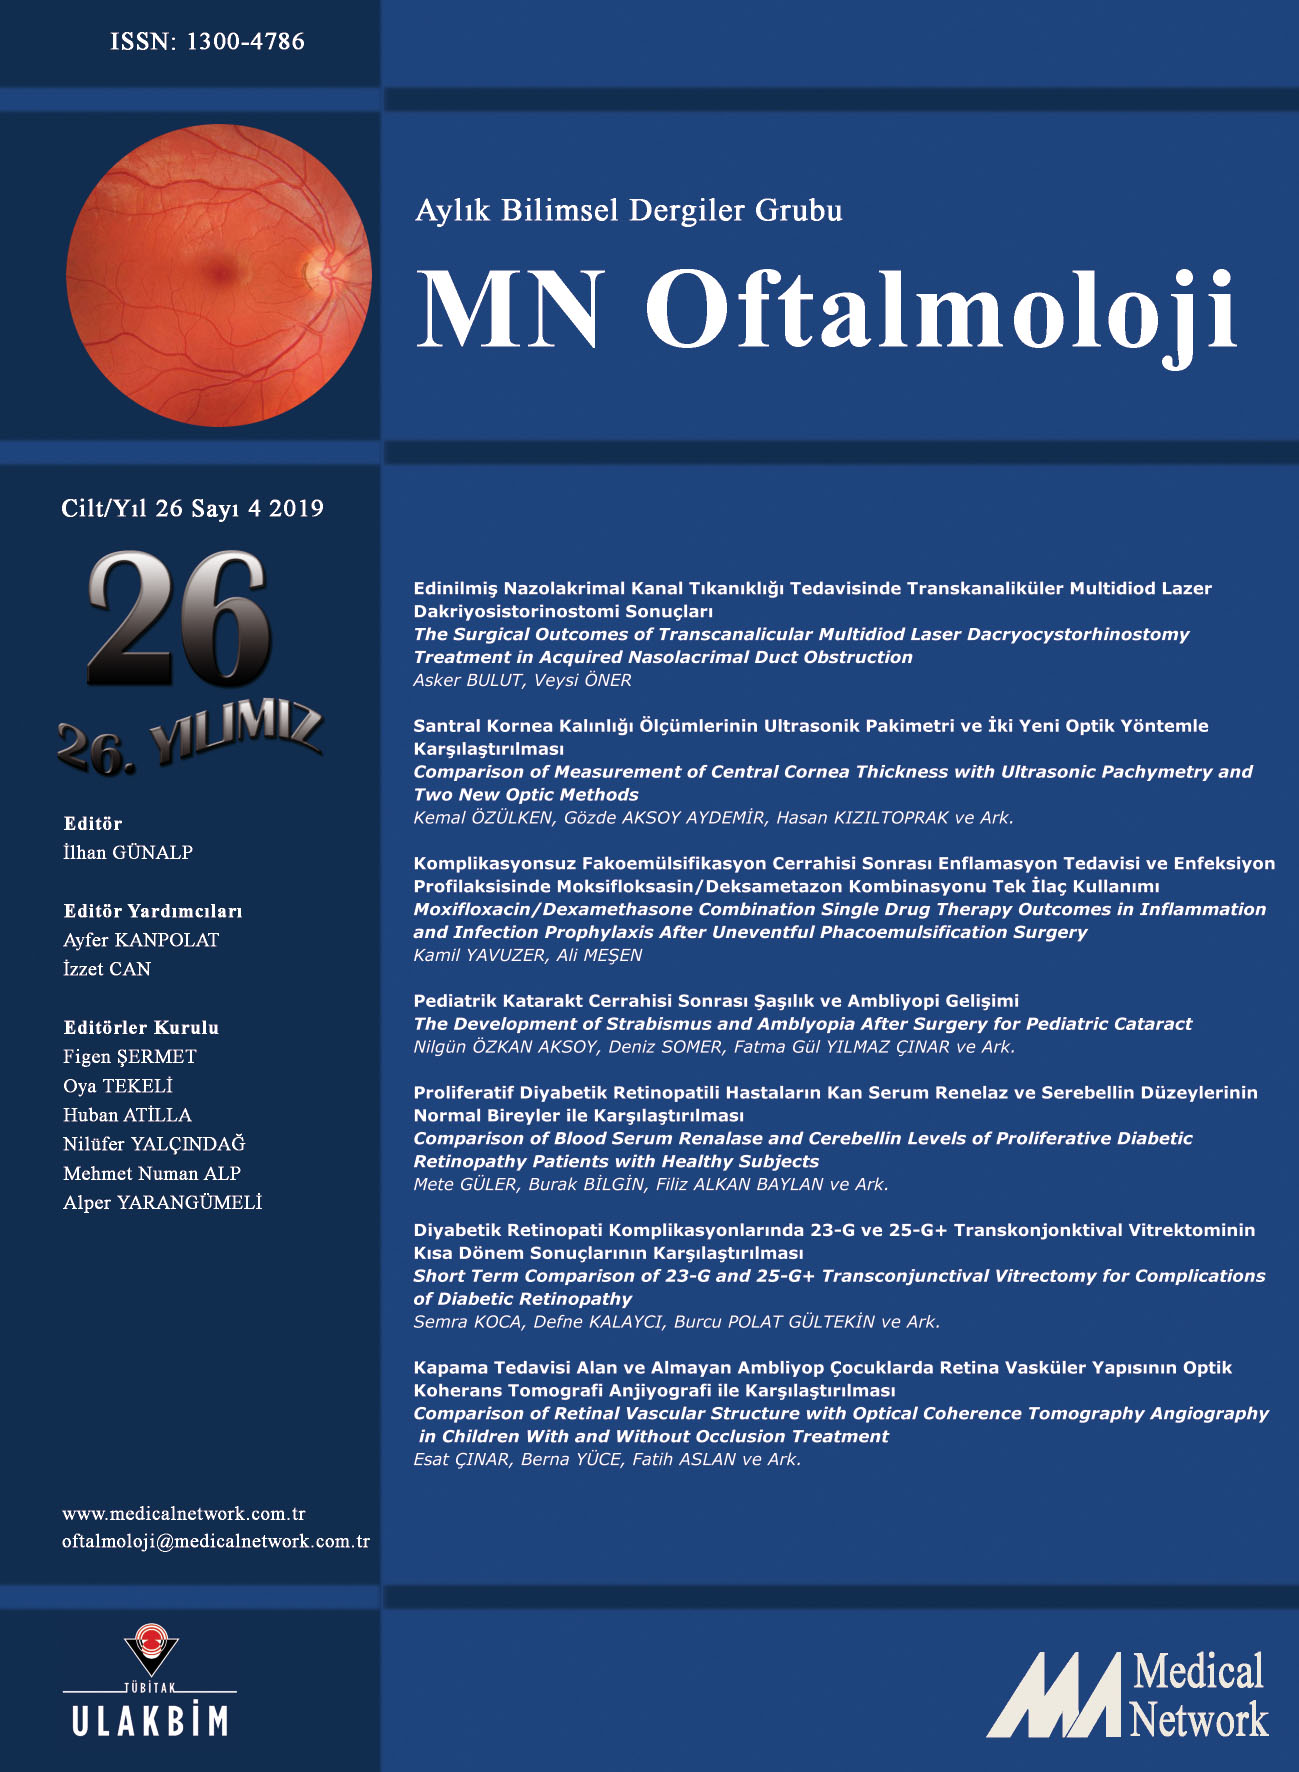 <p>MN Oftalmoloji Cilt: 26 Say: 4 2019 (MN Ophthalmology Volume: 26 No 4 2019)</p>